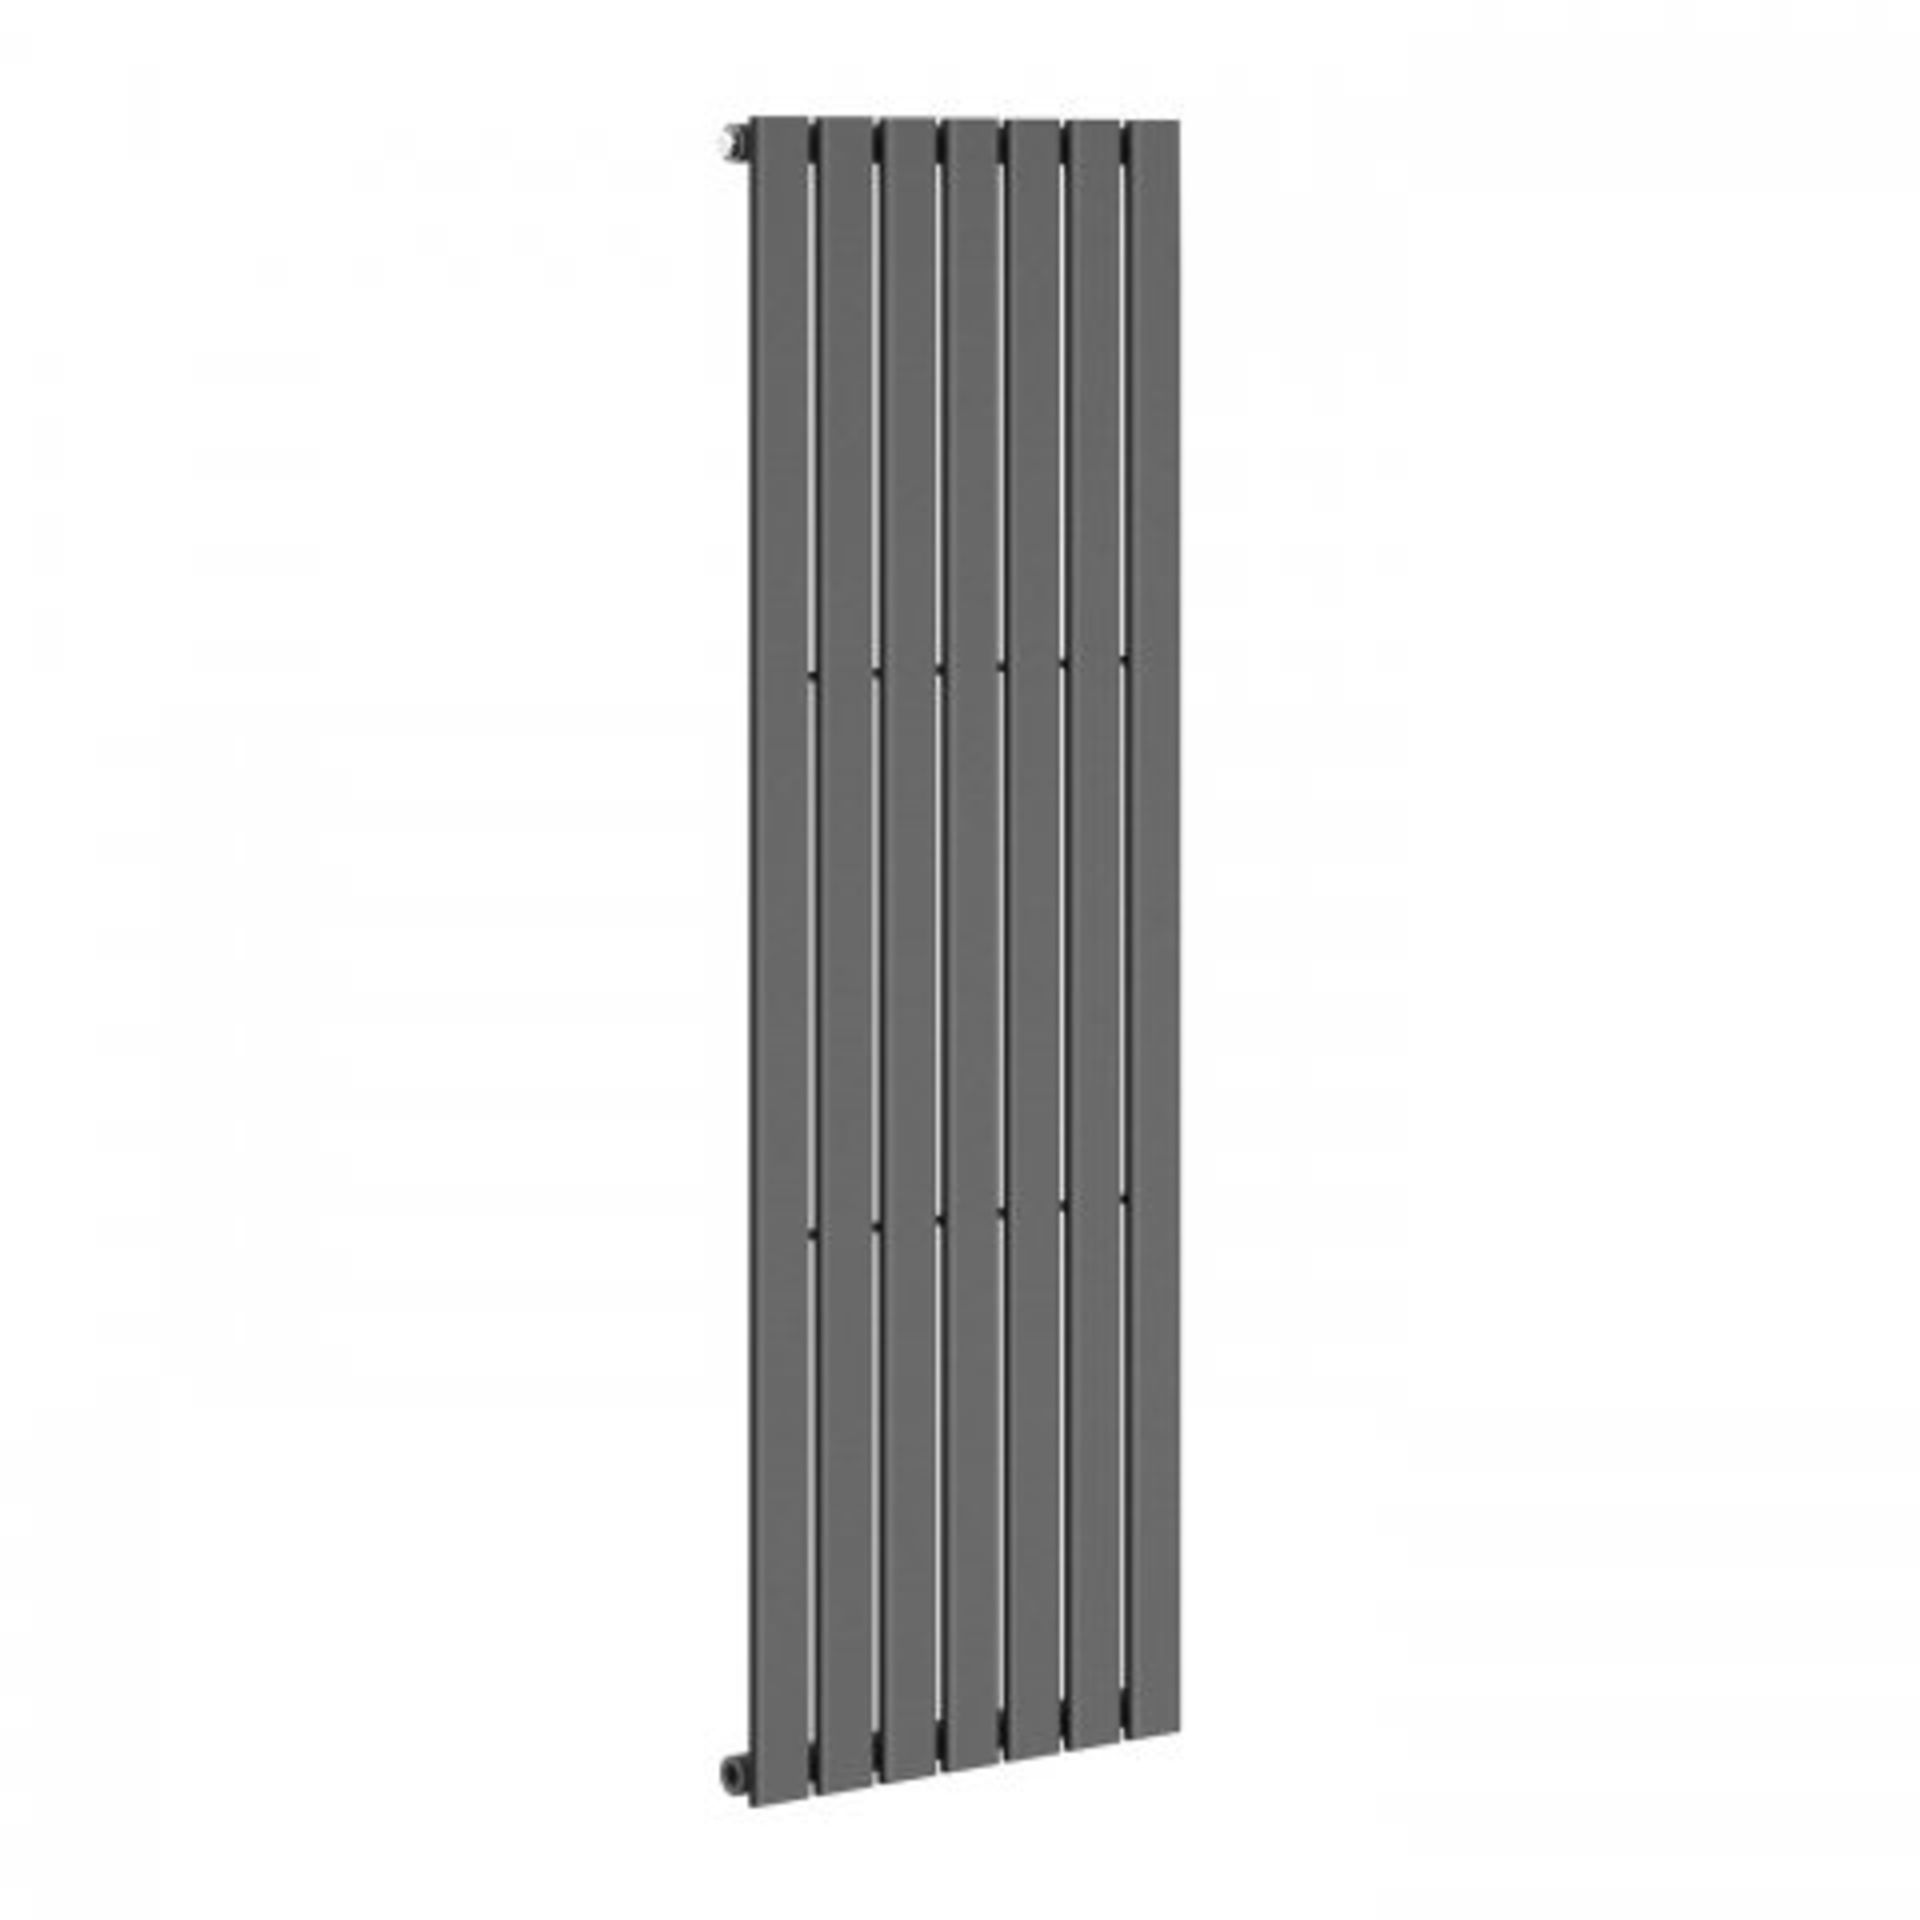 (M48) 1600x532mm Anthracite Single Flat Panel Vertical Radiator - Thera Premium. RRP £299.99. - Image 4 of 4